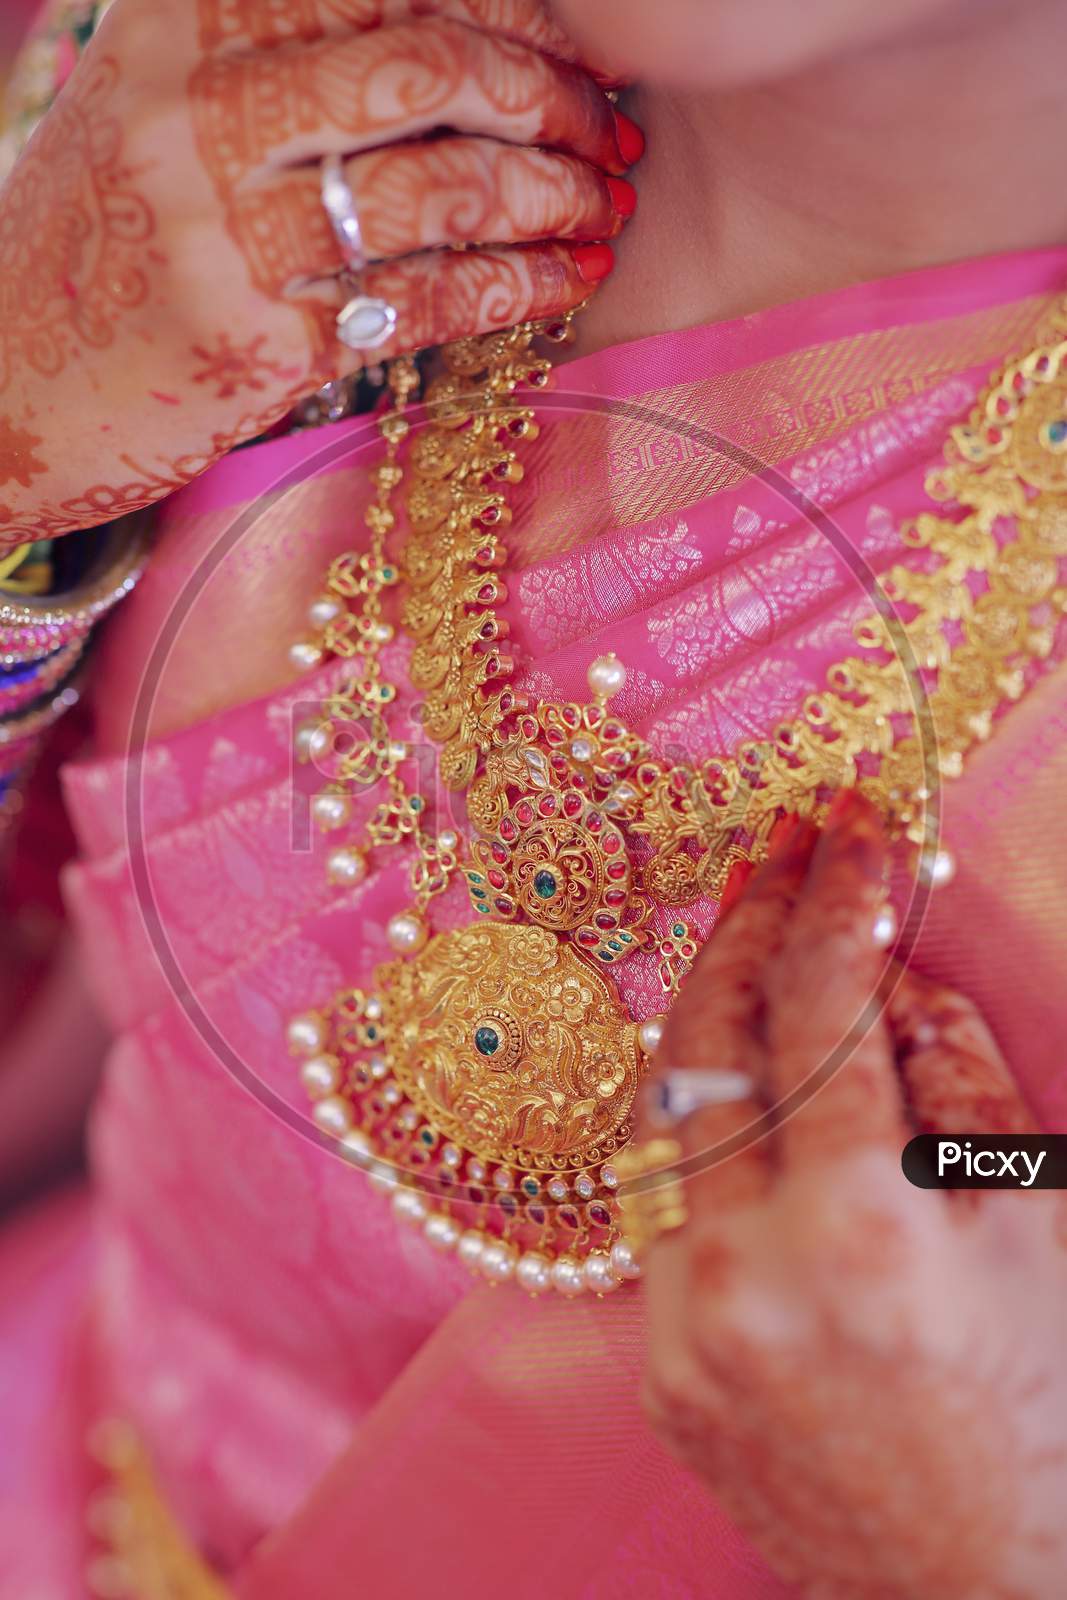 Indian Bride Wearing Elegant Gold Jewelery At an Indian Wedding